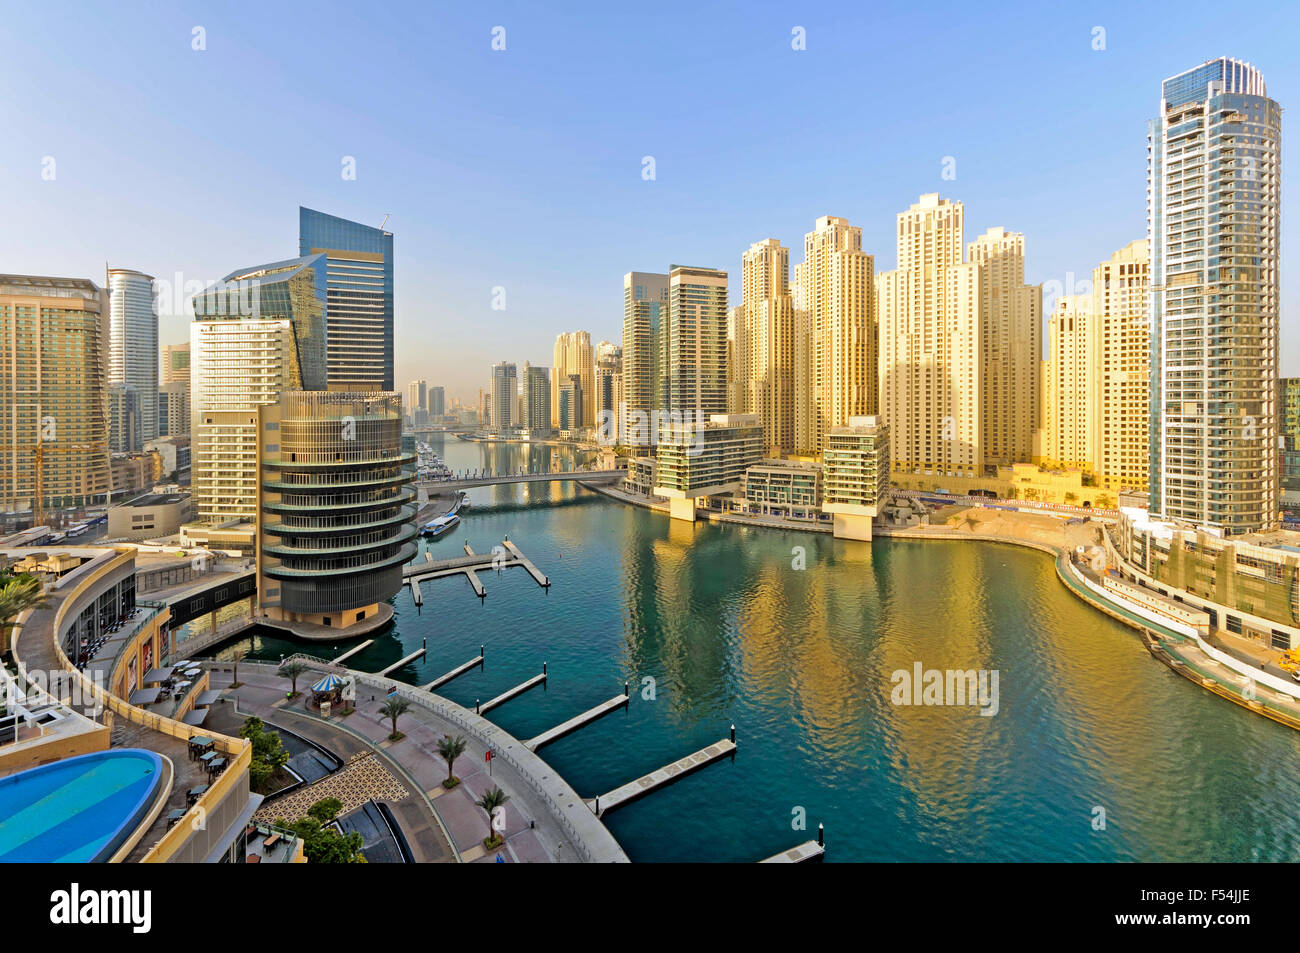 Dubai Marina - Dubai Marina is a district in the heart of what has become known as "new Dubai" in Dubai, United Arab Emirates. Stock Photo